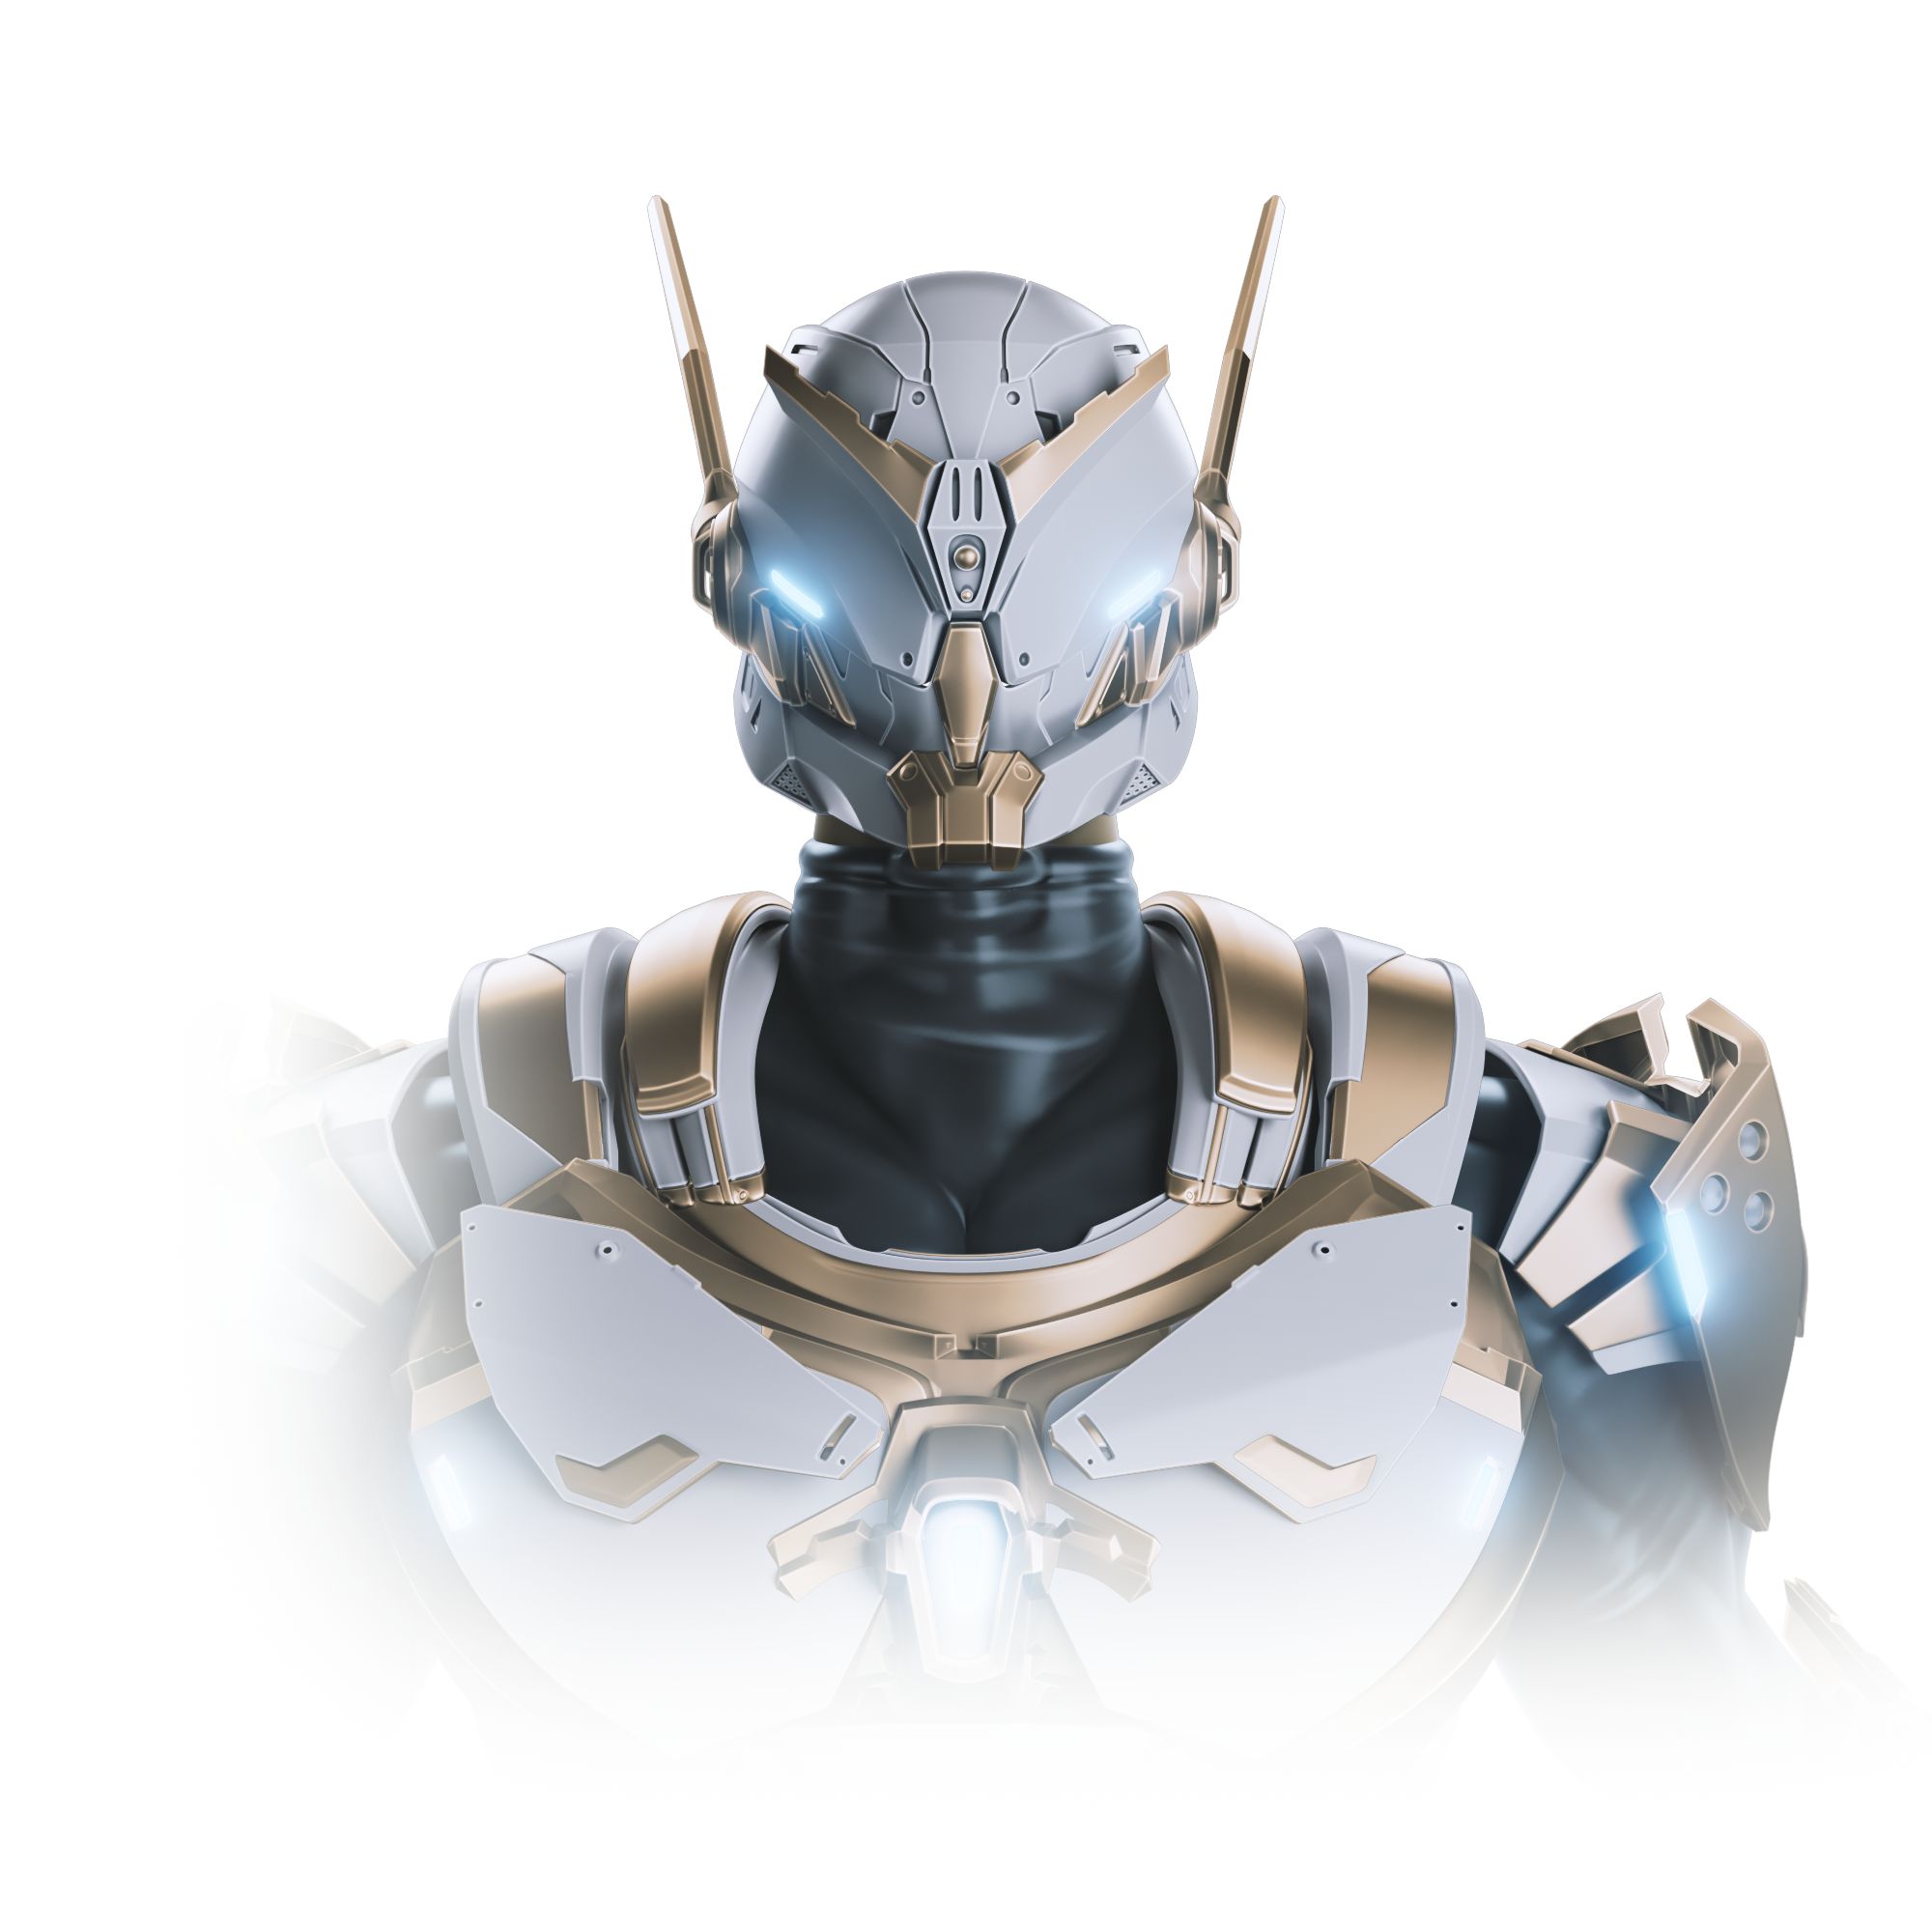 the armors transparent white